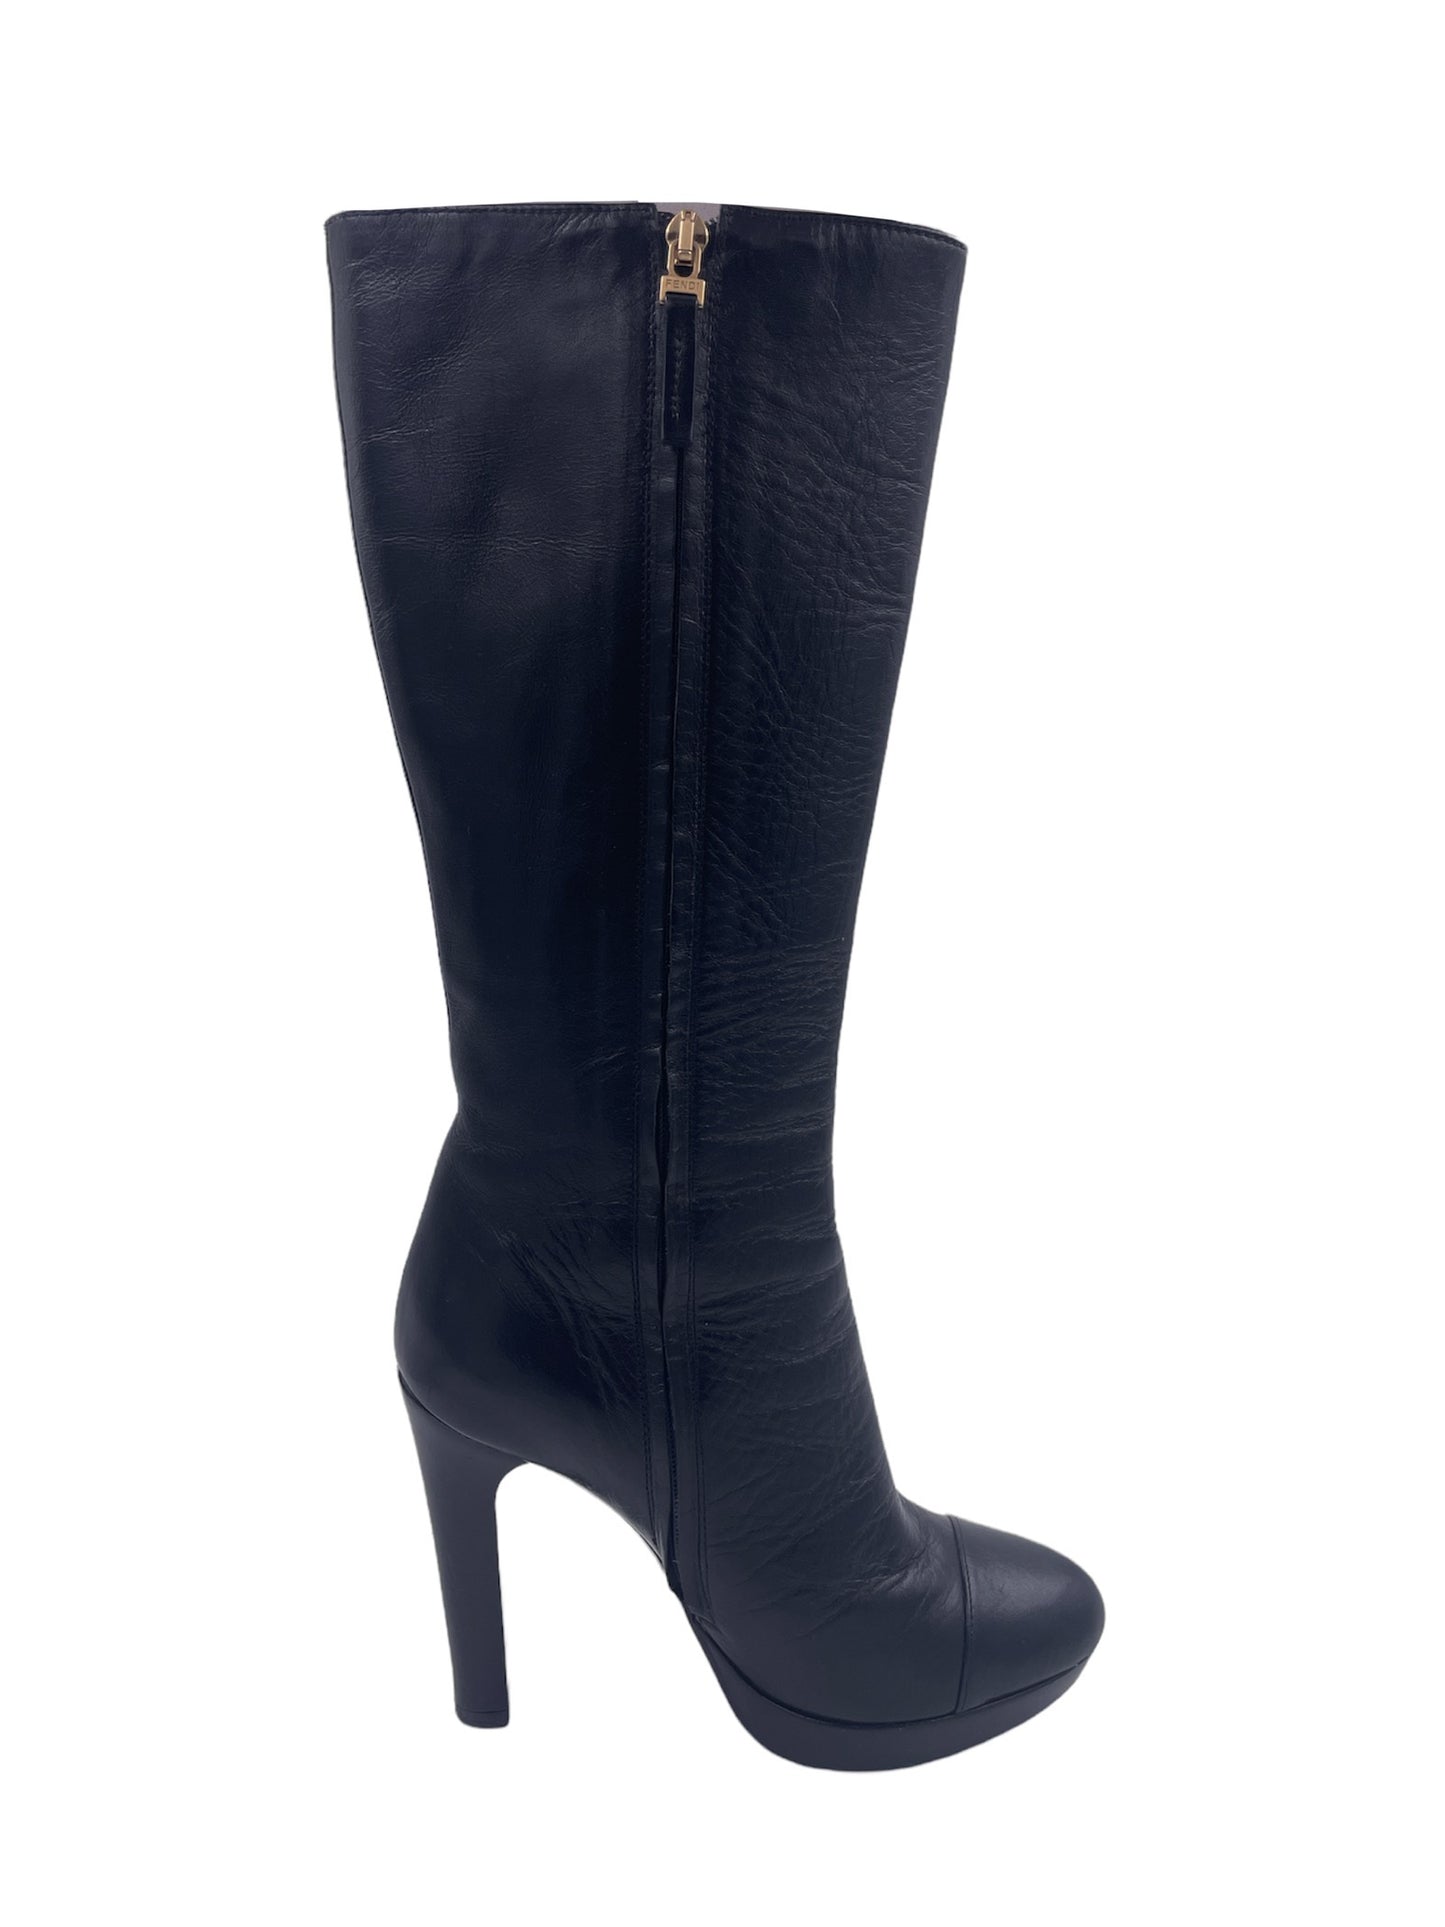 Fendi Black Leather Boot